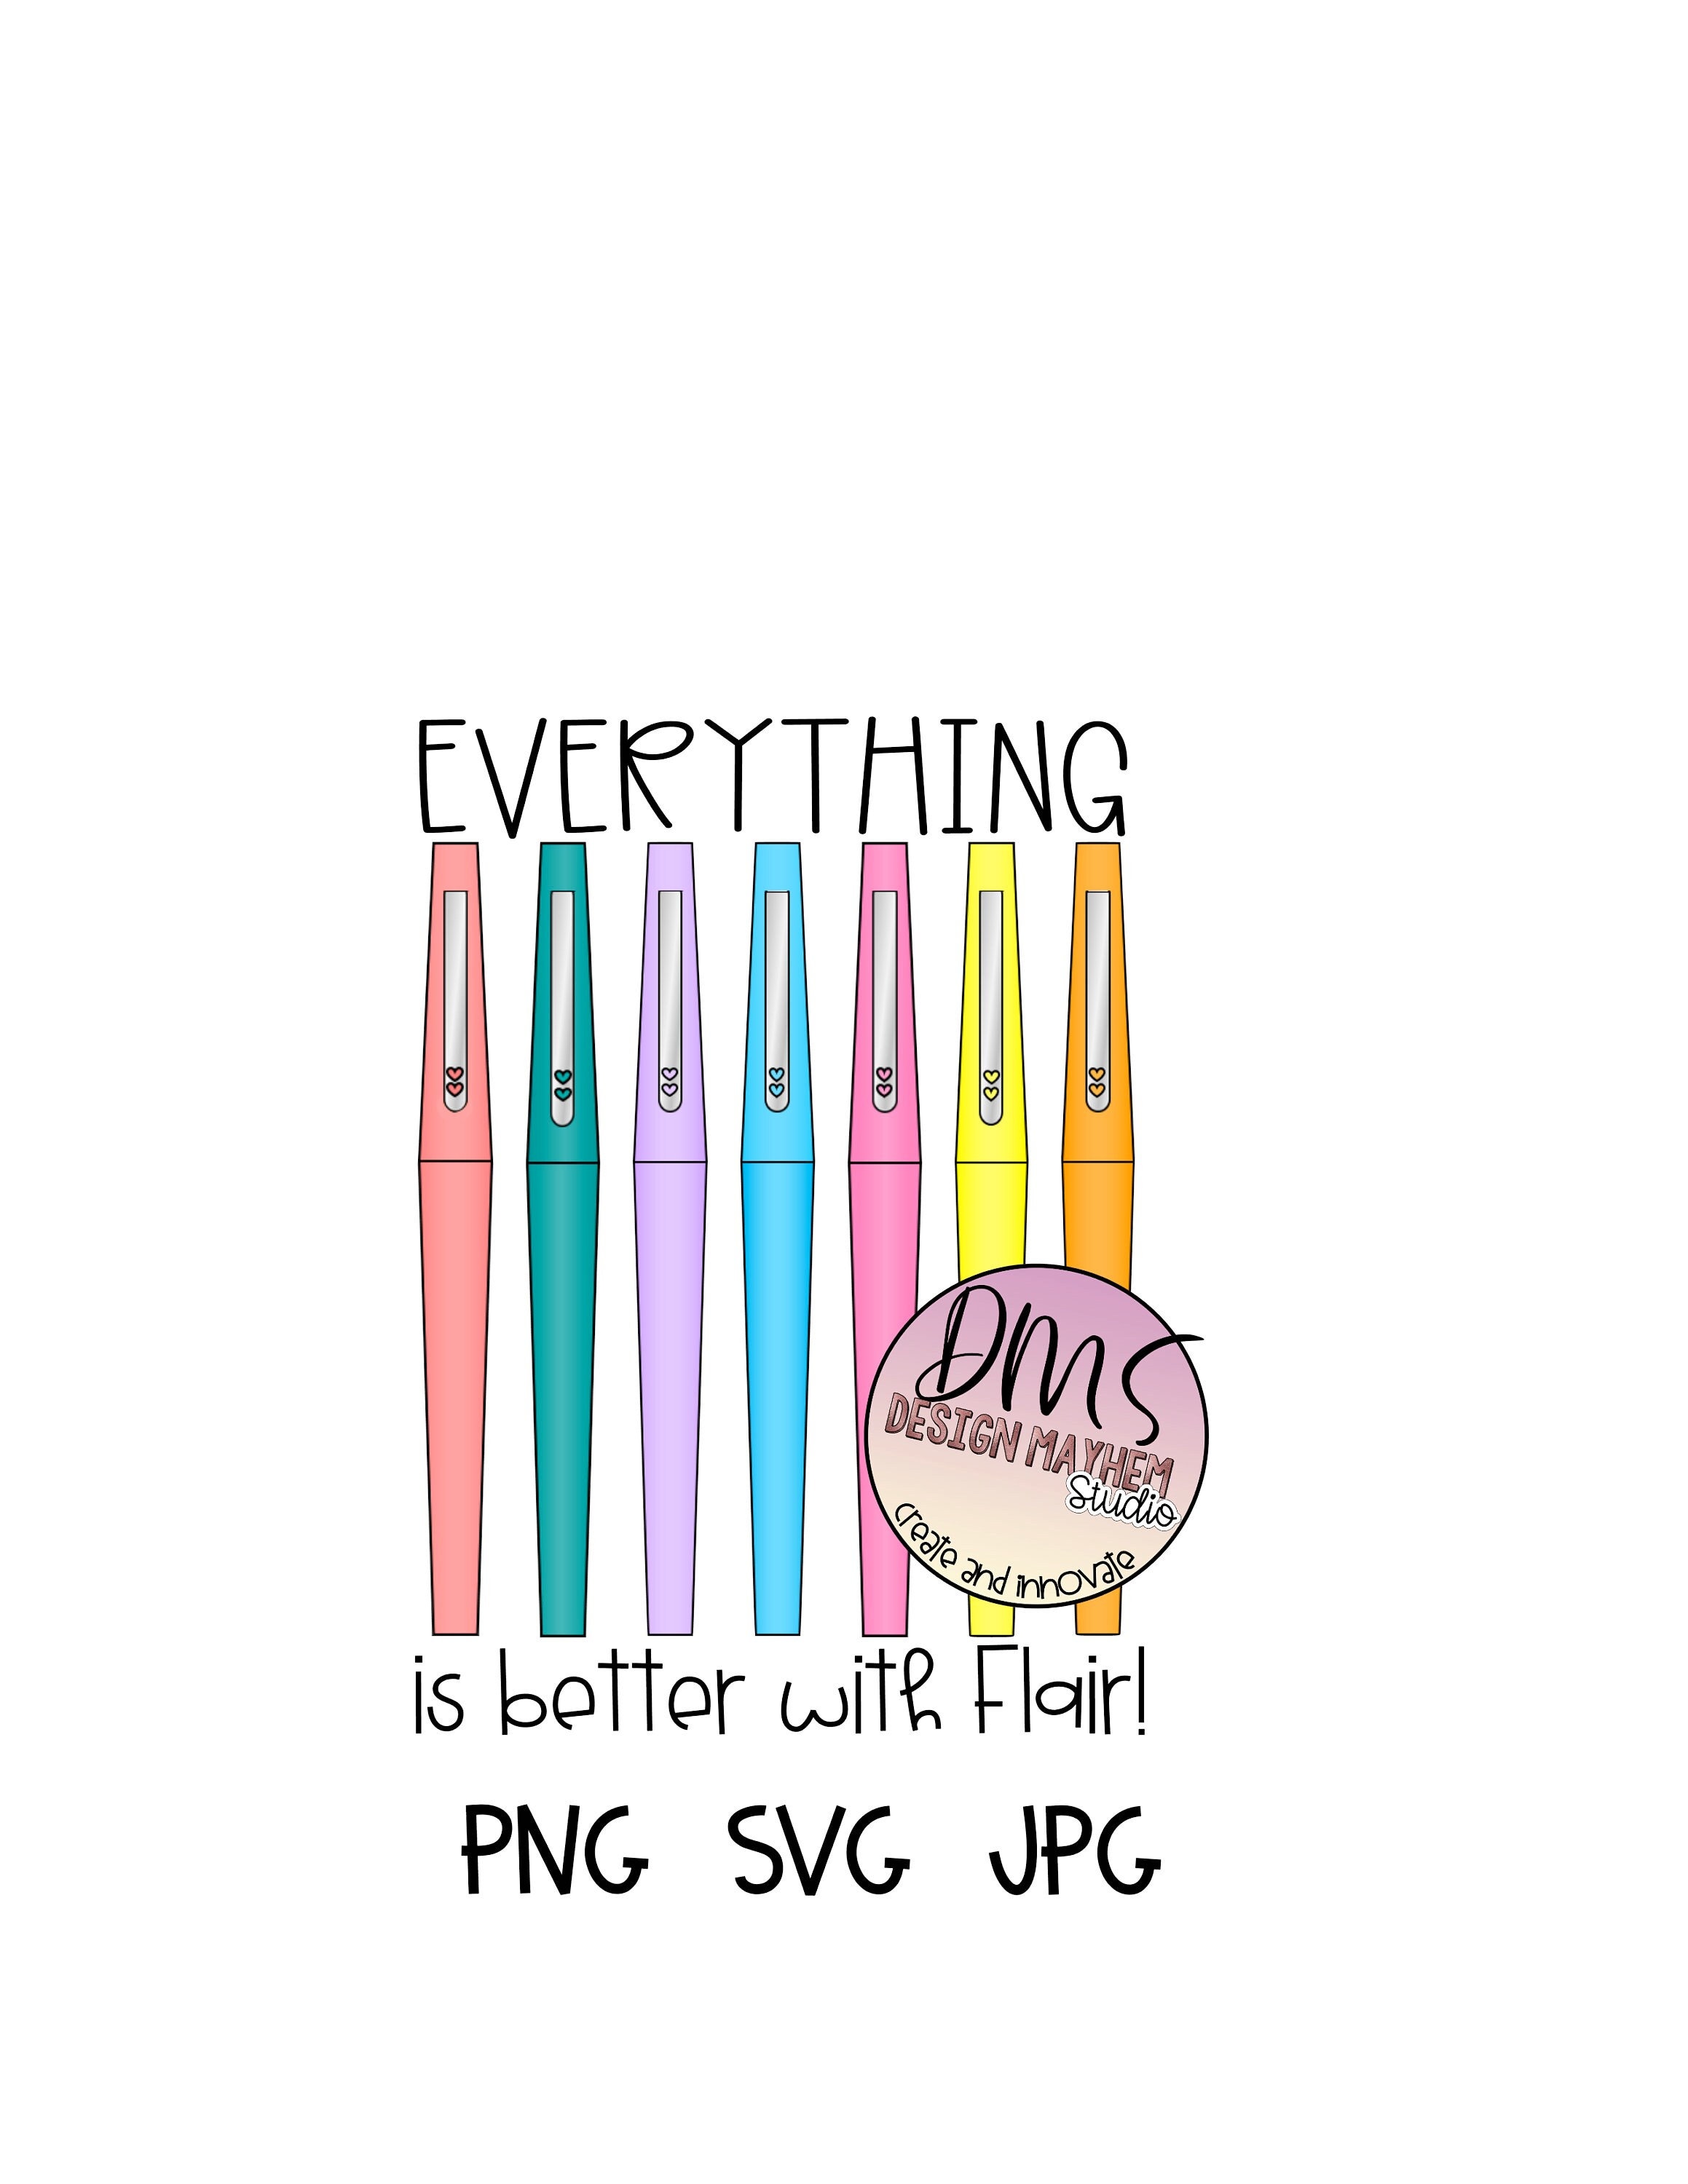 We ALWAYS need more flair pens. Always. 📸- @appliciousteacher